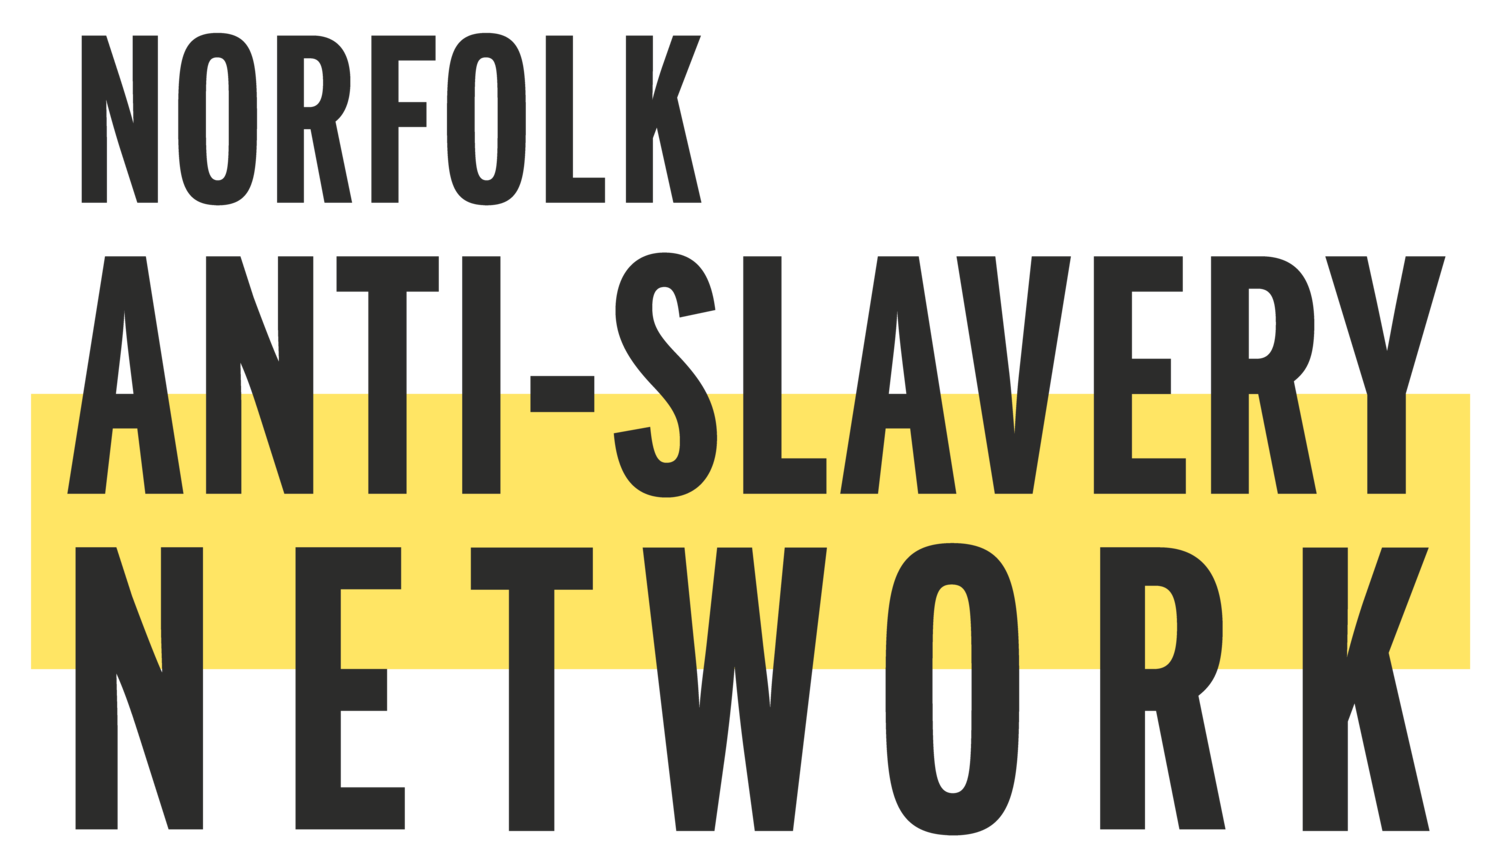 Norfolk Anti-Slavery Network